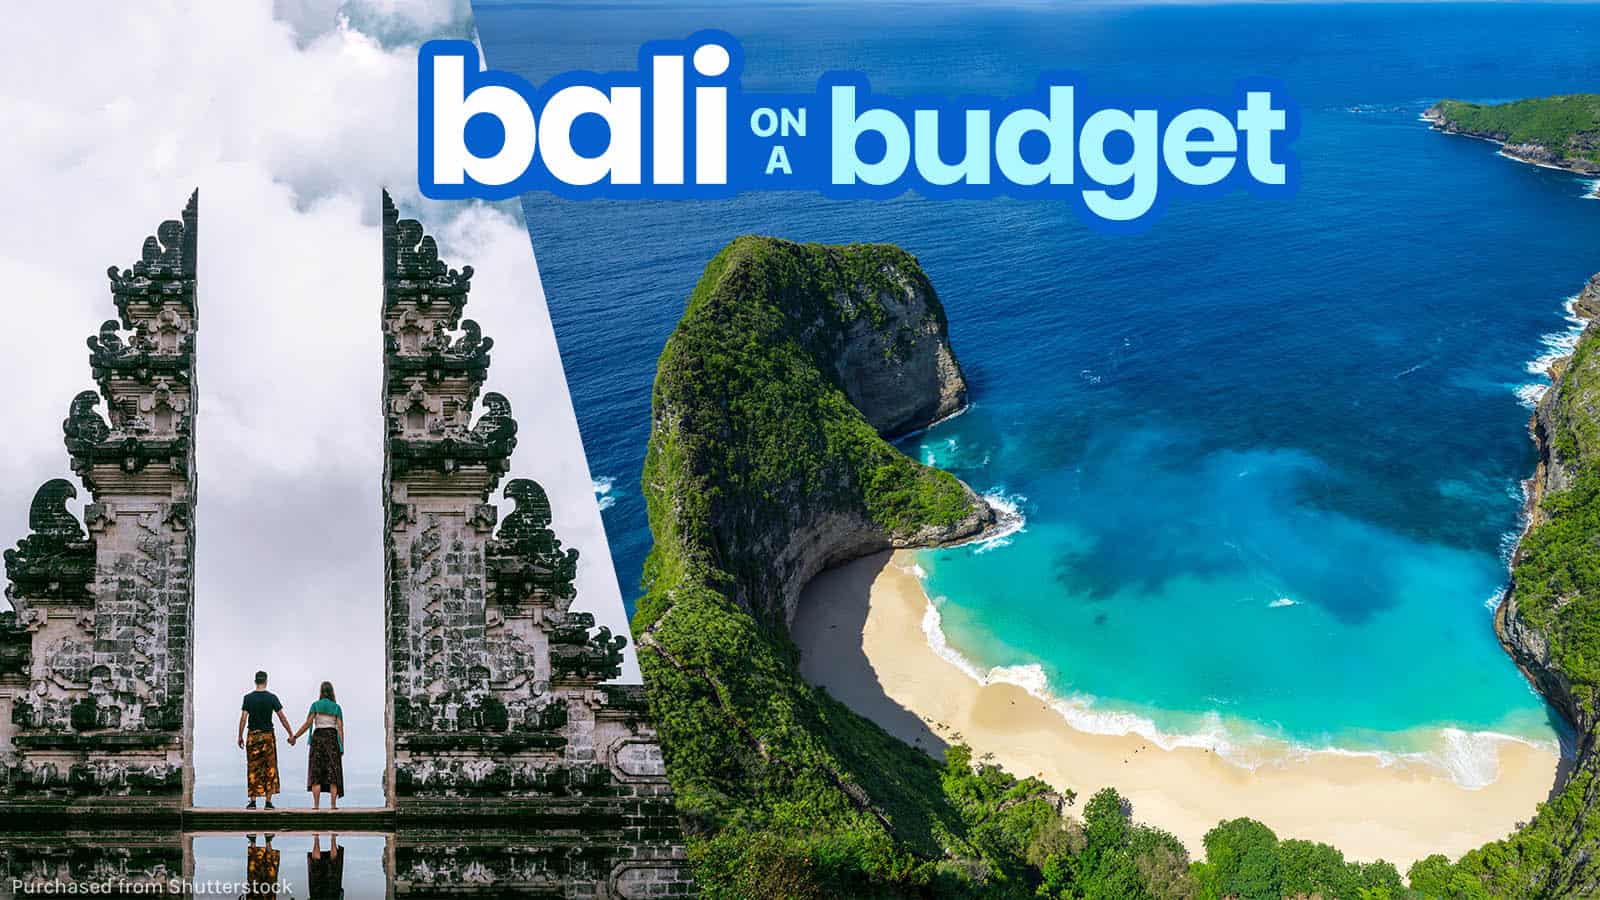 Bali Honeymoon Travel Guide